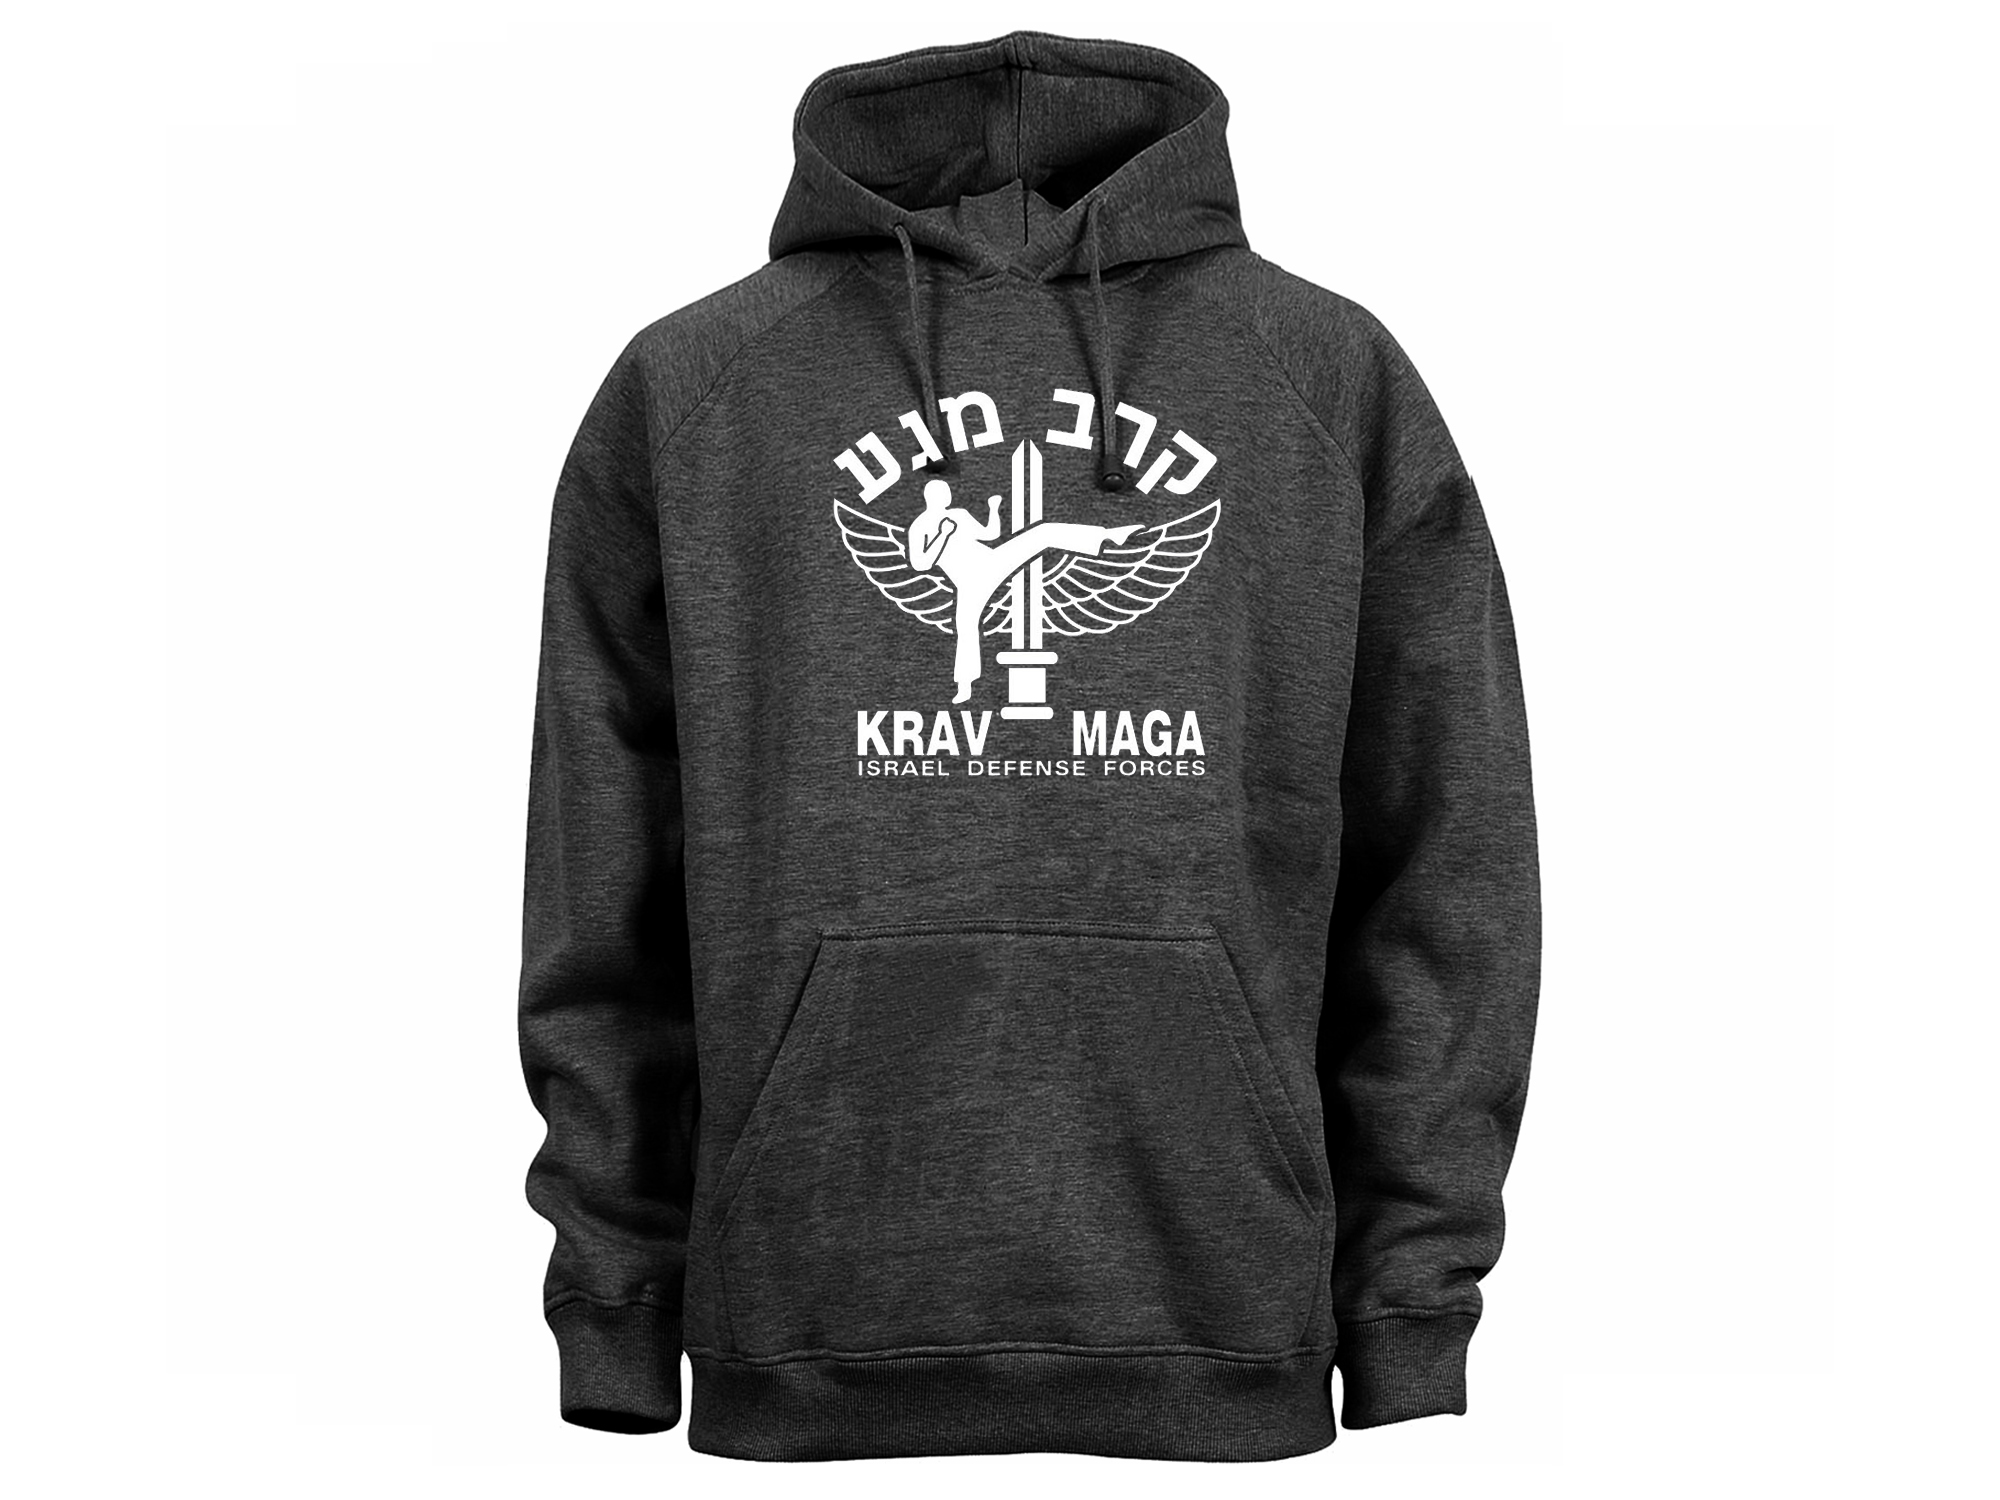 Krav Maga emblem dark heather gray hoodie